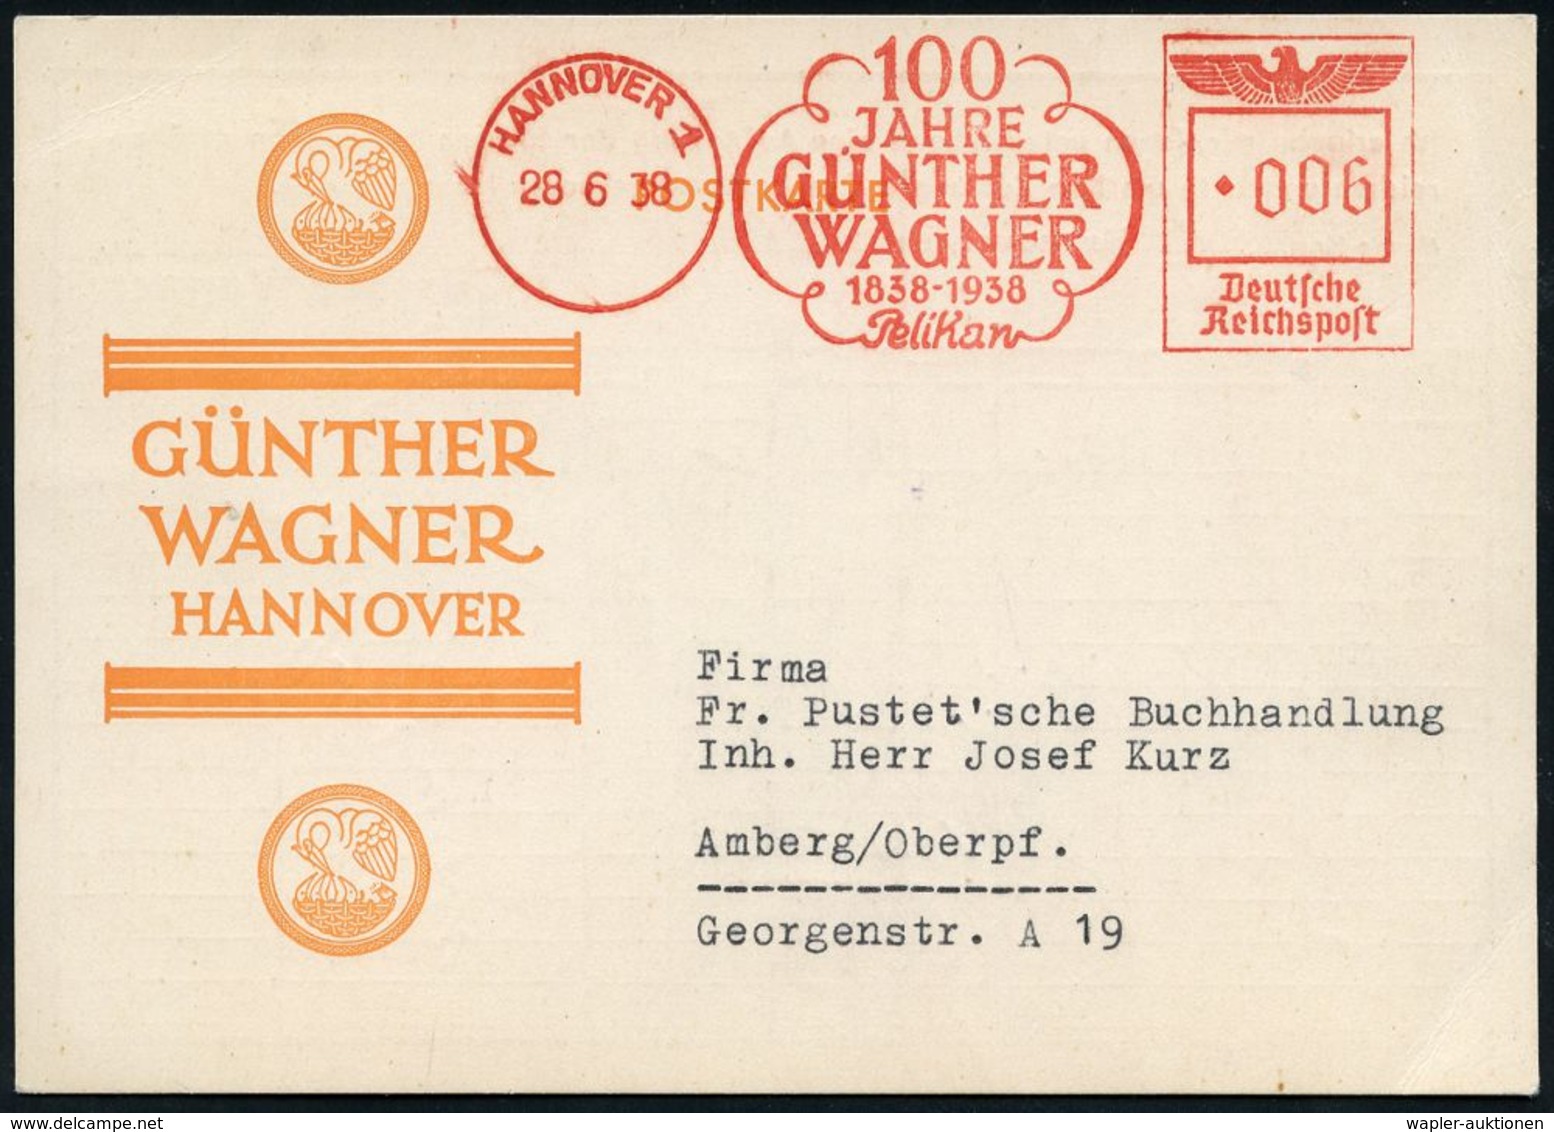 BÜRO / SCHREIBGERÄTE / SCHREIBMASCHINE : HANNOVER 1/ 100/ JAHRE/ GÜNTHER/ WAGNER/ 1838-1938/ Pelikan 1938 (28.6.) Selten - Non Classés